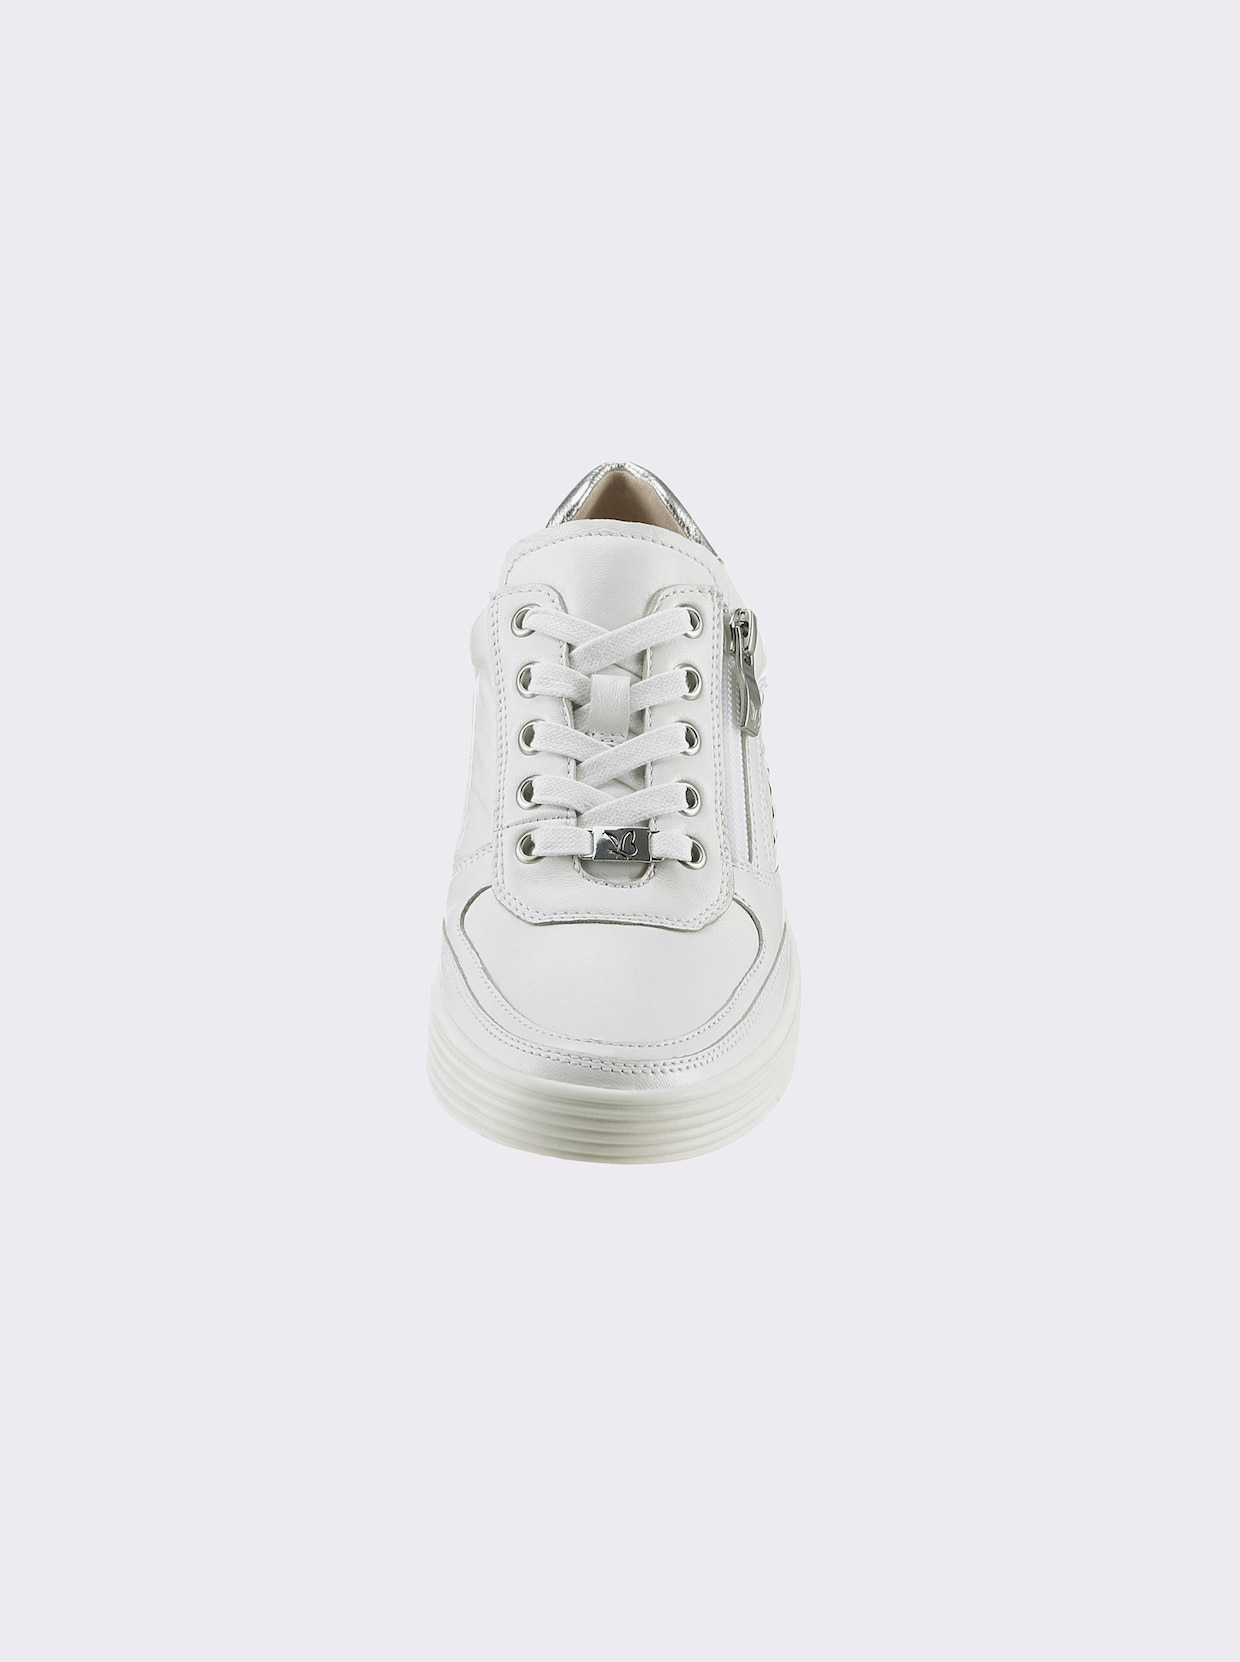 Caprice Sneakers - blanc